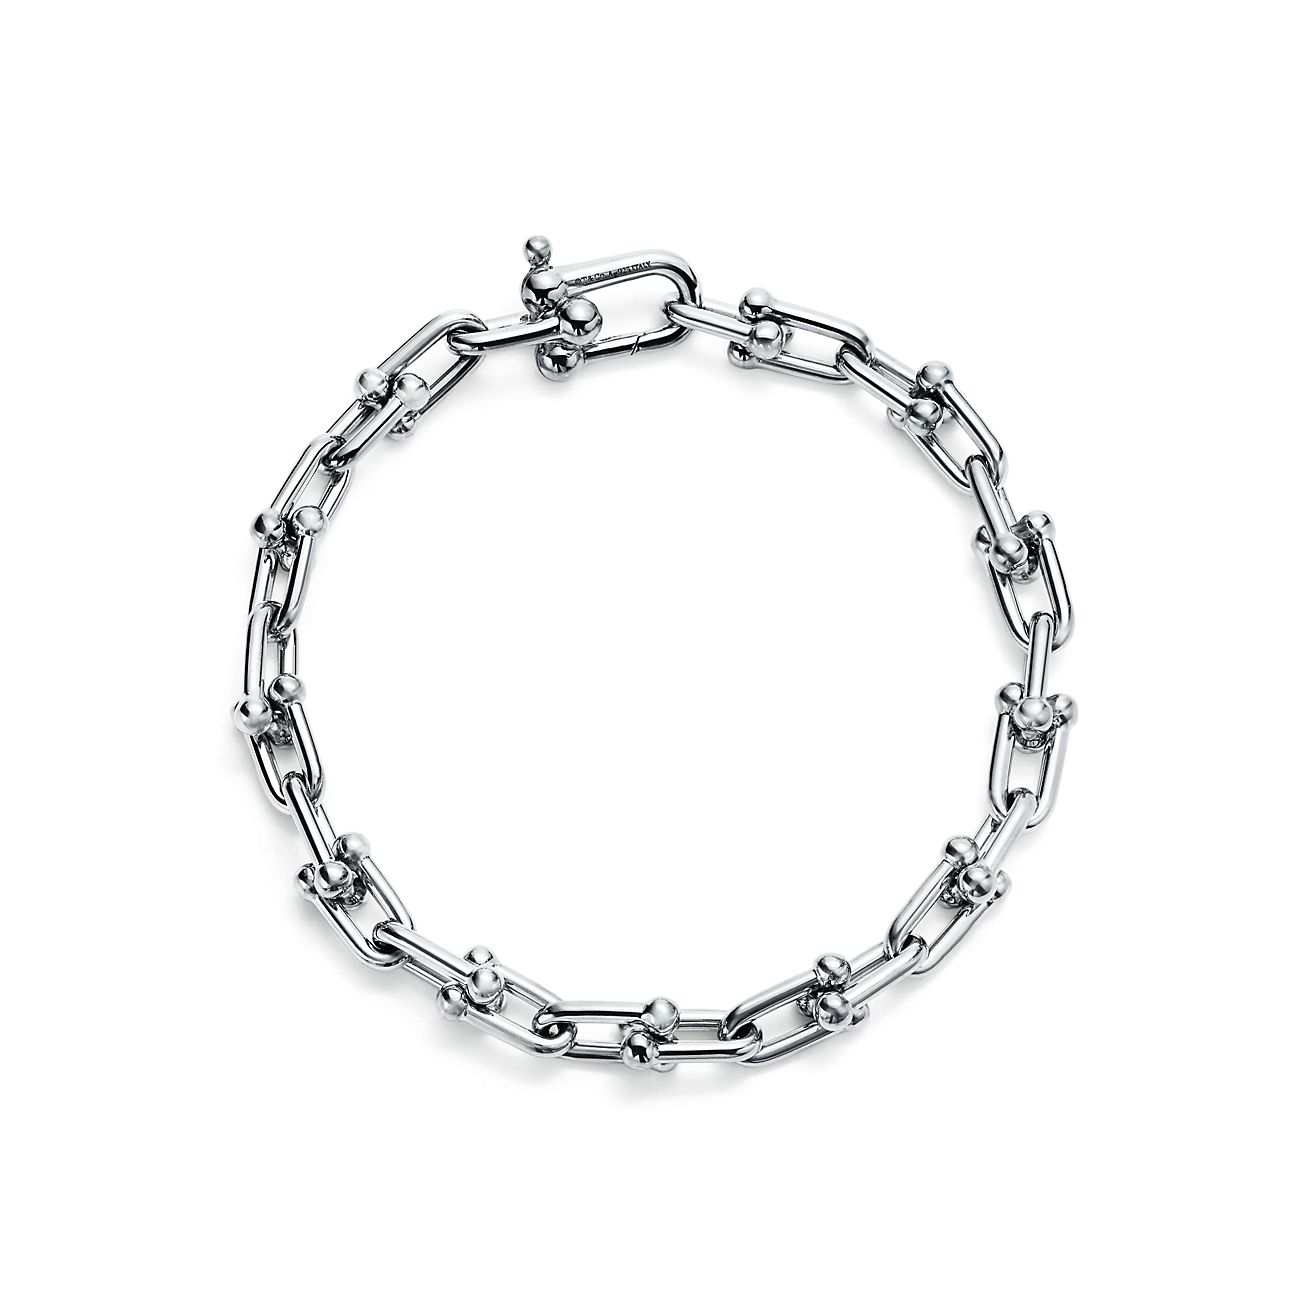 Tiffany HardWear Link Bracelet in Silver, Medium | Tiffany & Co. Singapore